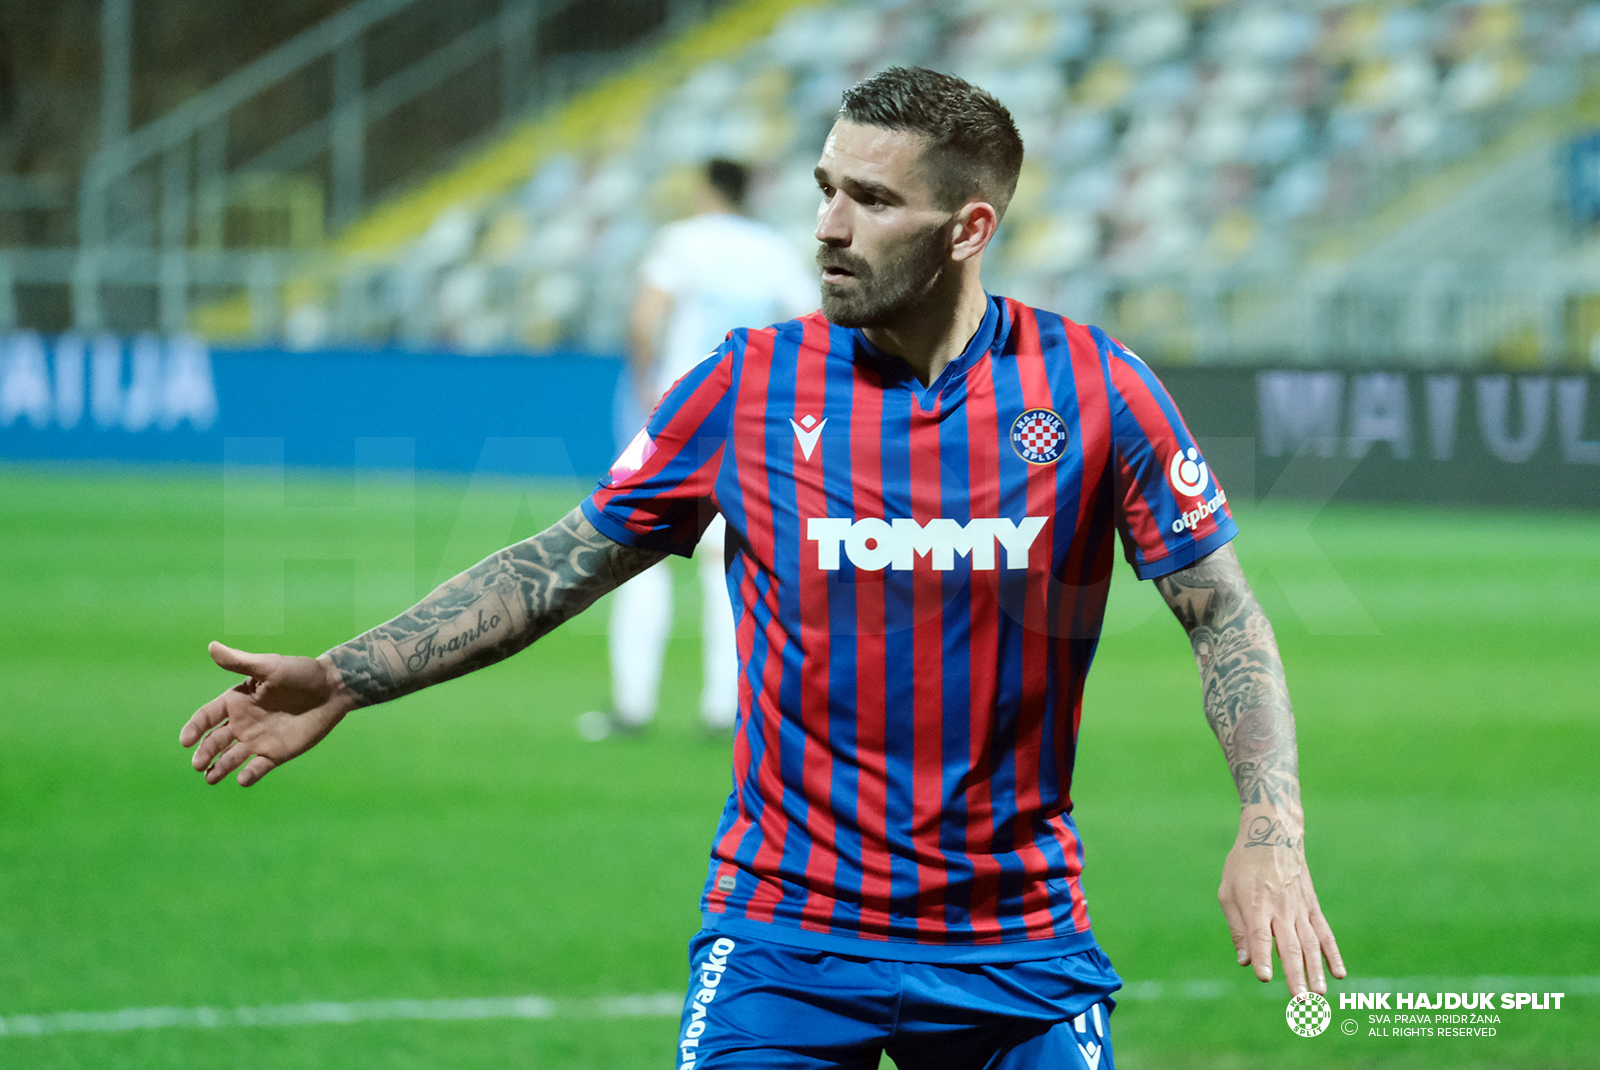 HNK Hajduk Split x HNK Rijeka » Placar ao vivo, Palpites, Estatísticas +  Odds